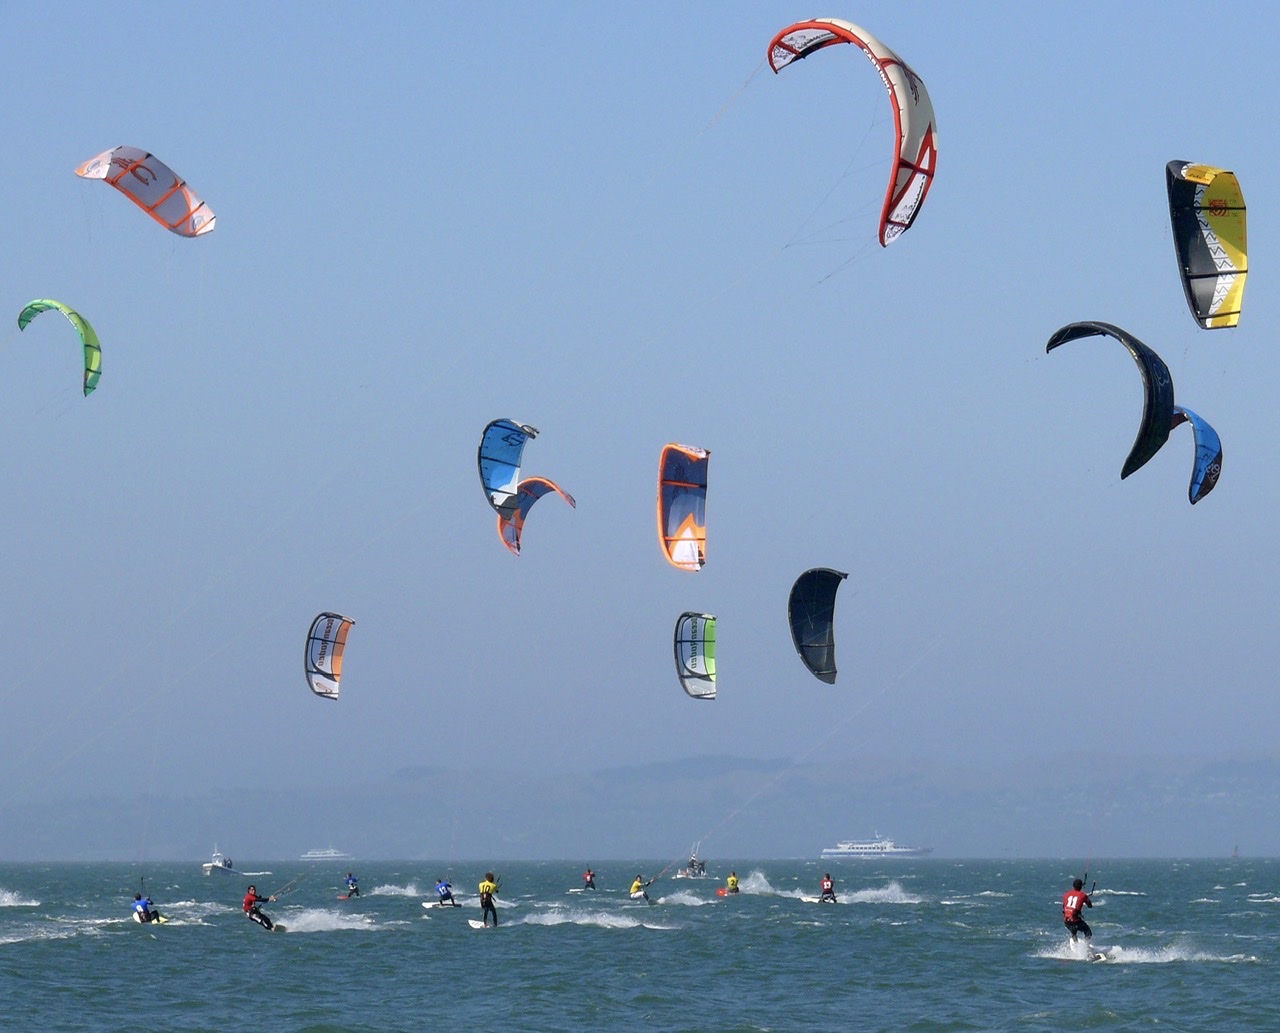 Kitesurfers on San Francisco Bay